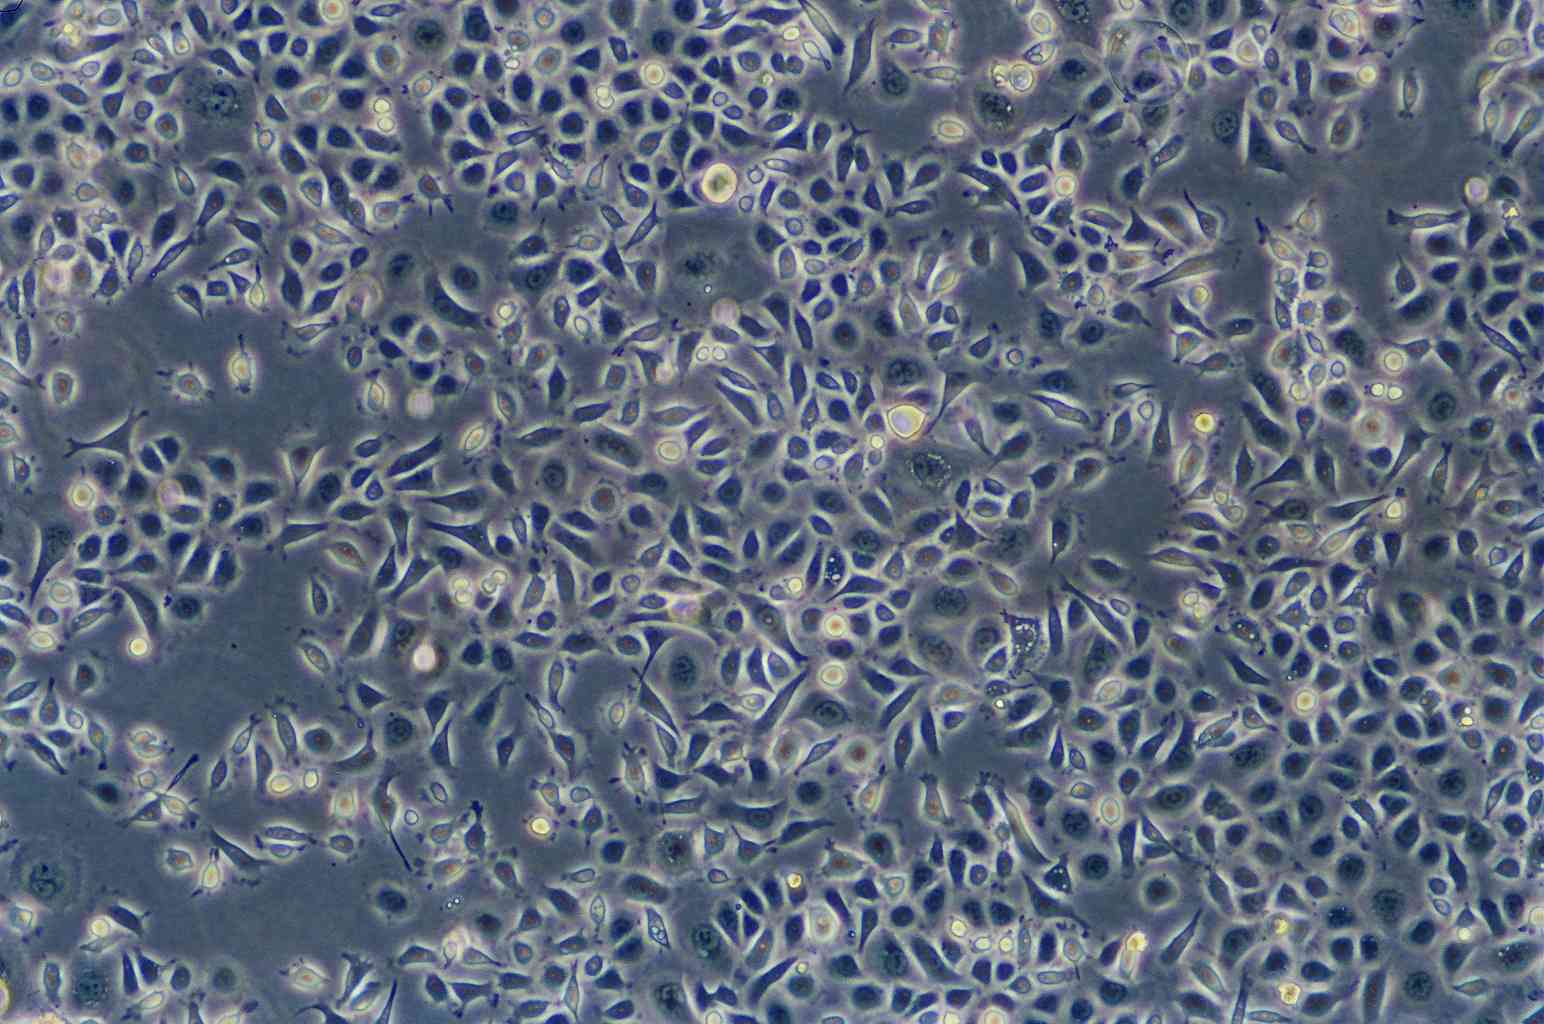 MES-SA/Dx5 cell line人子宫肉瘤细胞系